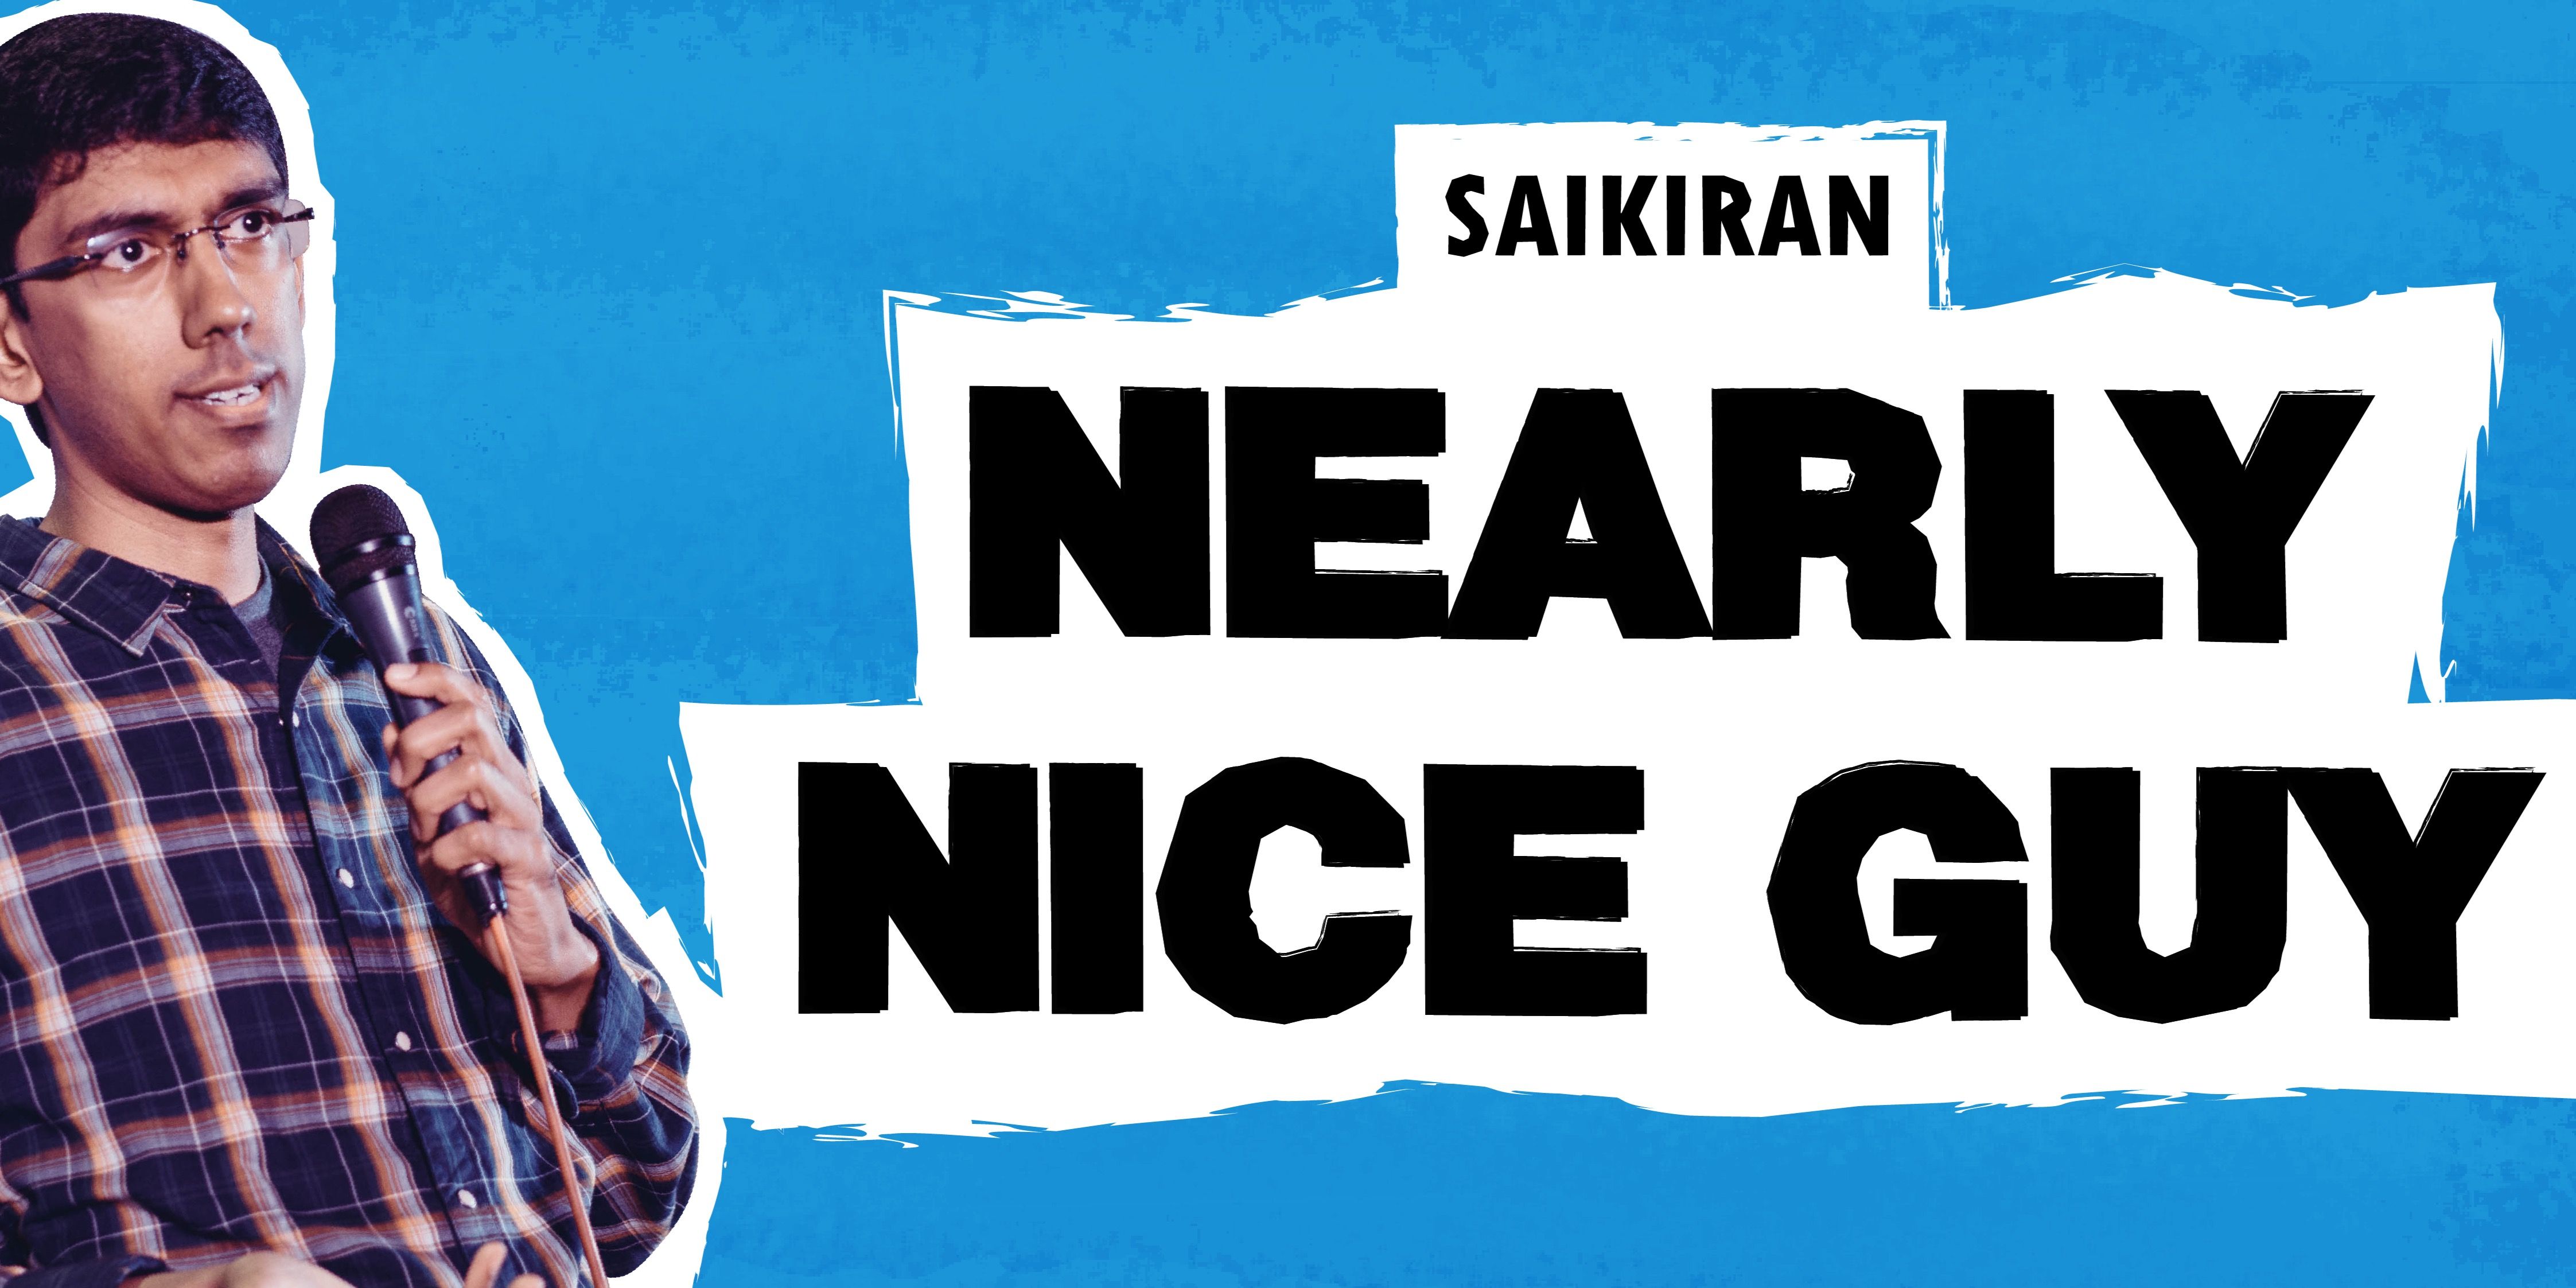 Nearly Nice Guy by Saikiran (in Secunderabad)